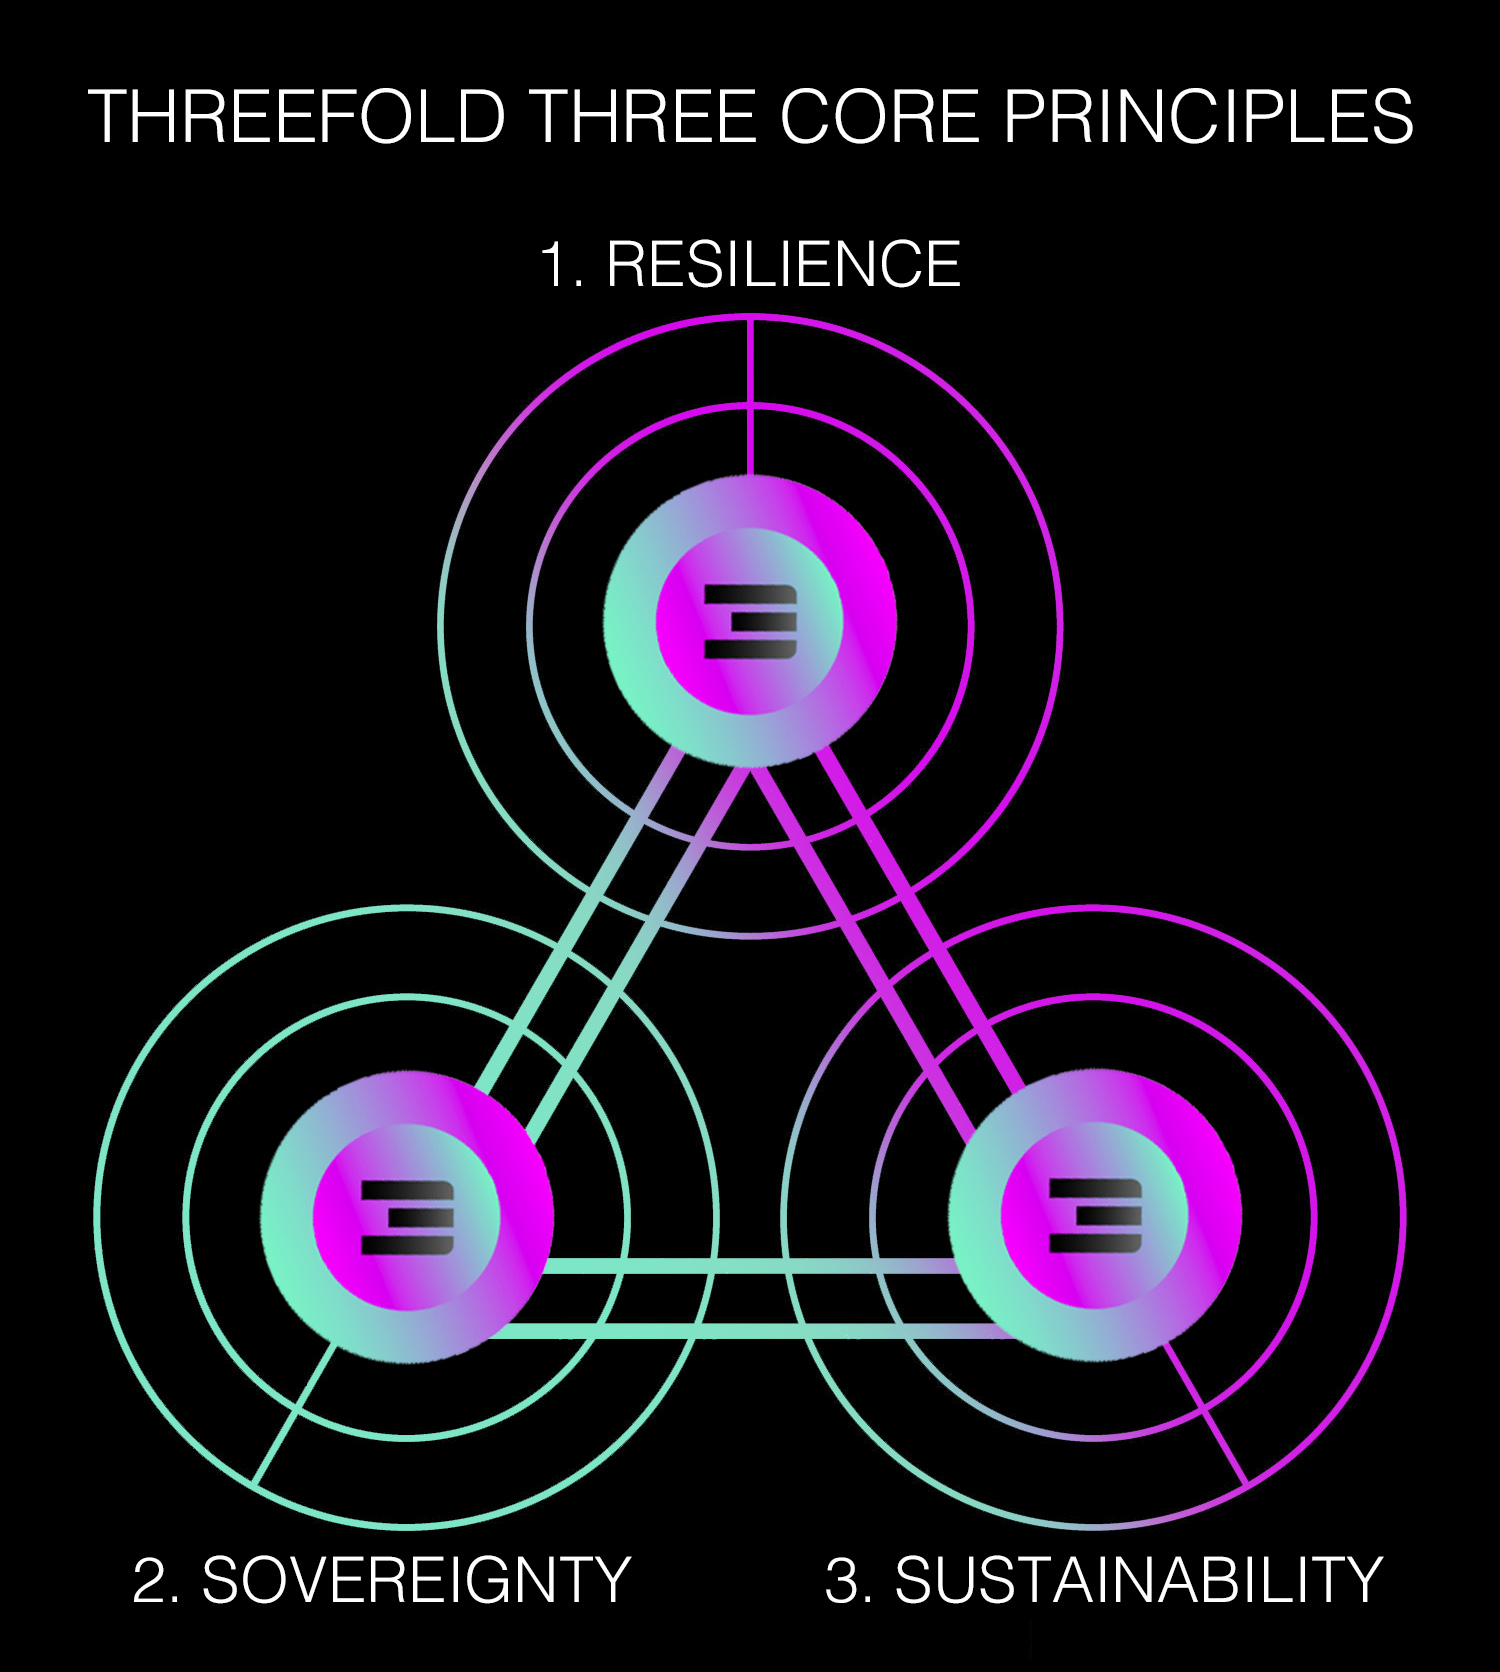 THREEFOLD THREE CORE PRINCIPLES